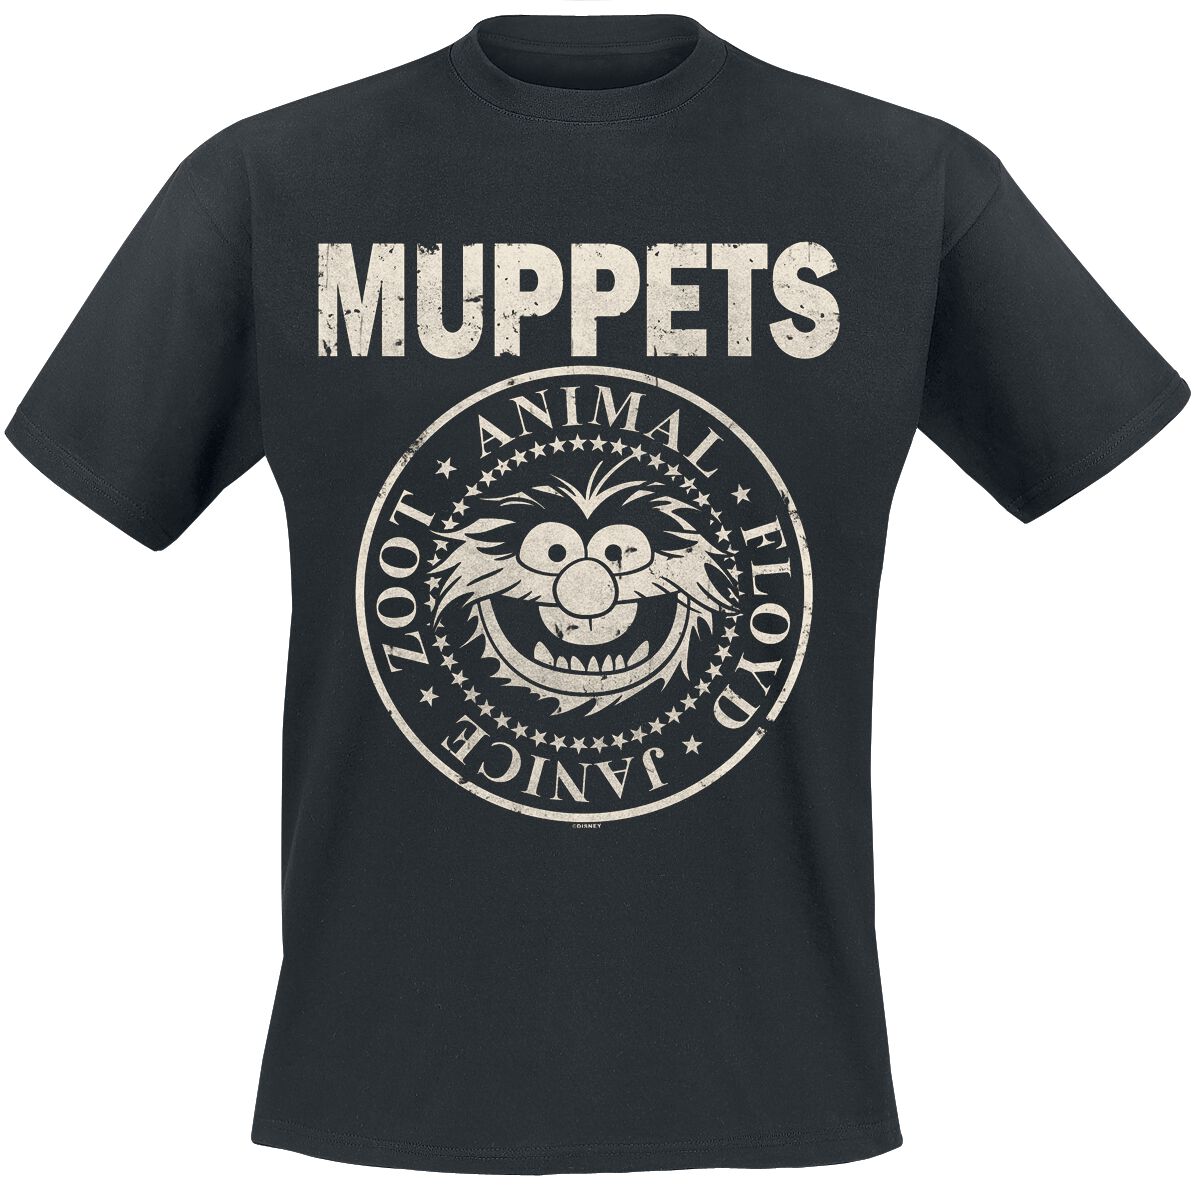 The Muppets Animal - Rock 'n' Roll T-Shirt black